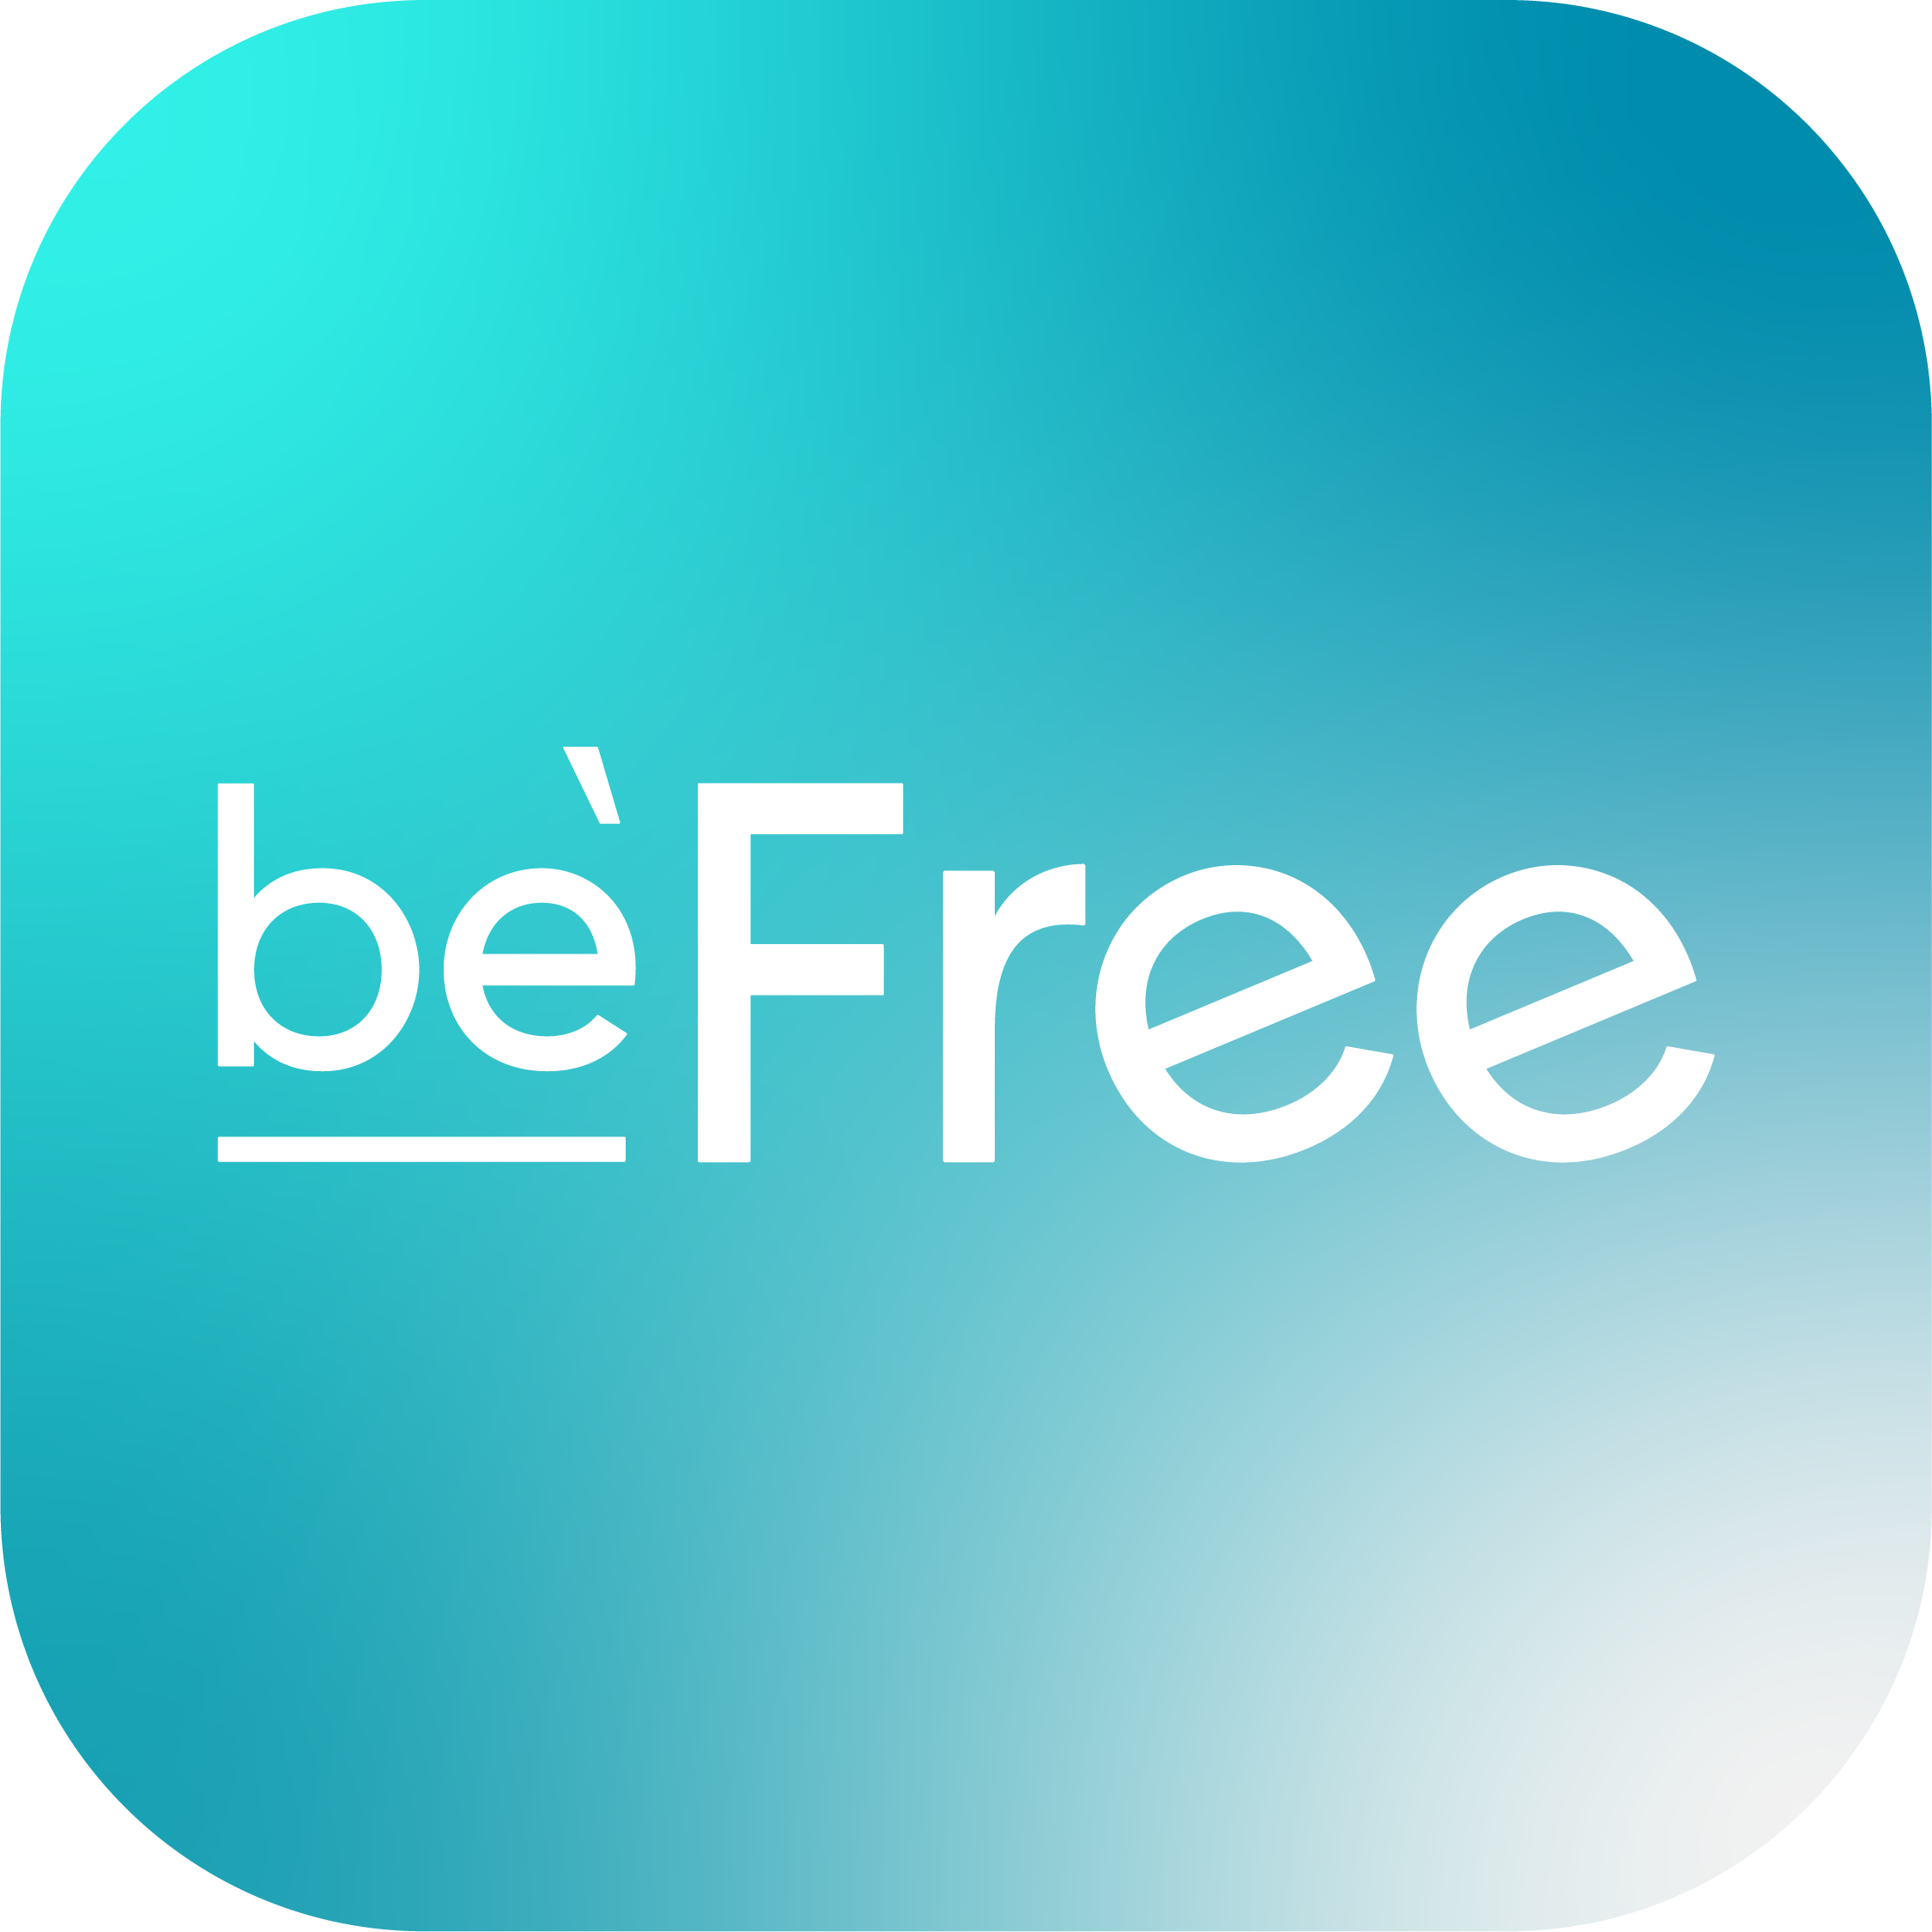 BeFree - Get be free today! 选择健康，重获自由！